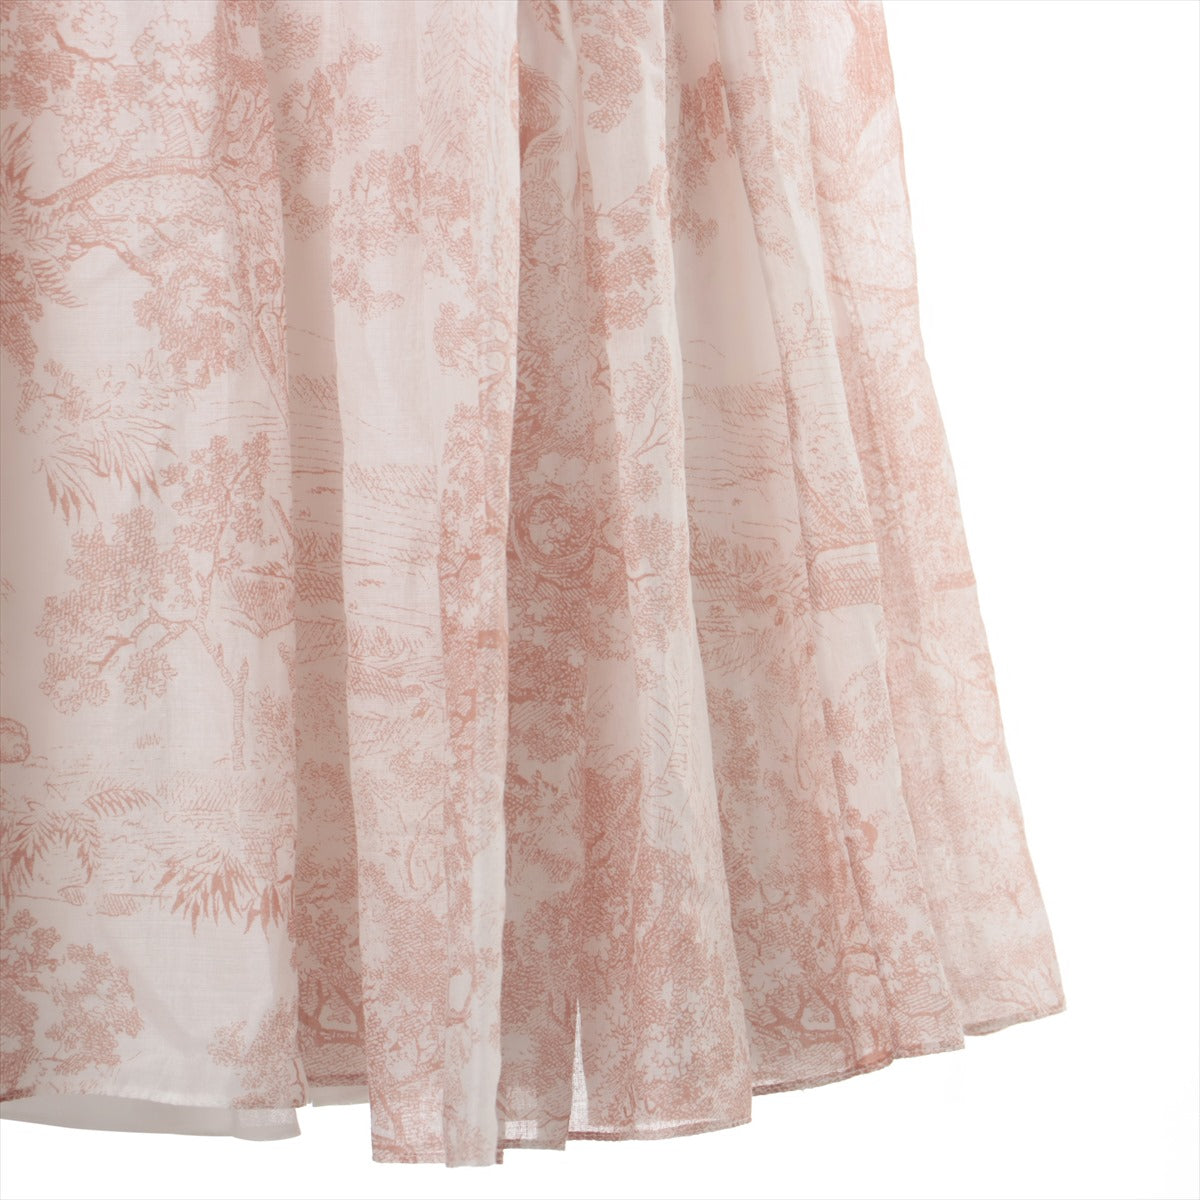 Christian Dior Toile de Jouy Cotton Skirt I42 Ladies' Pink  911J29A3802